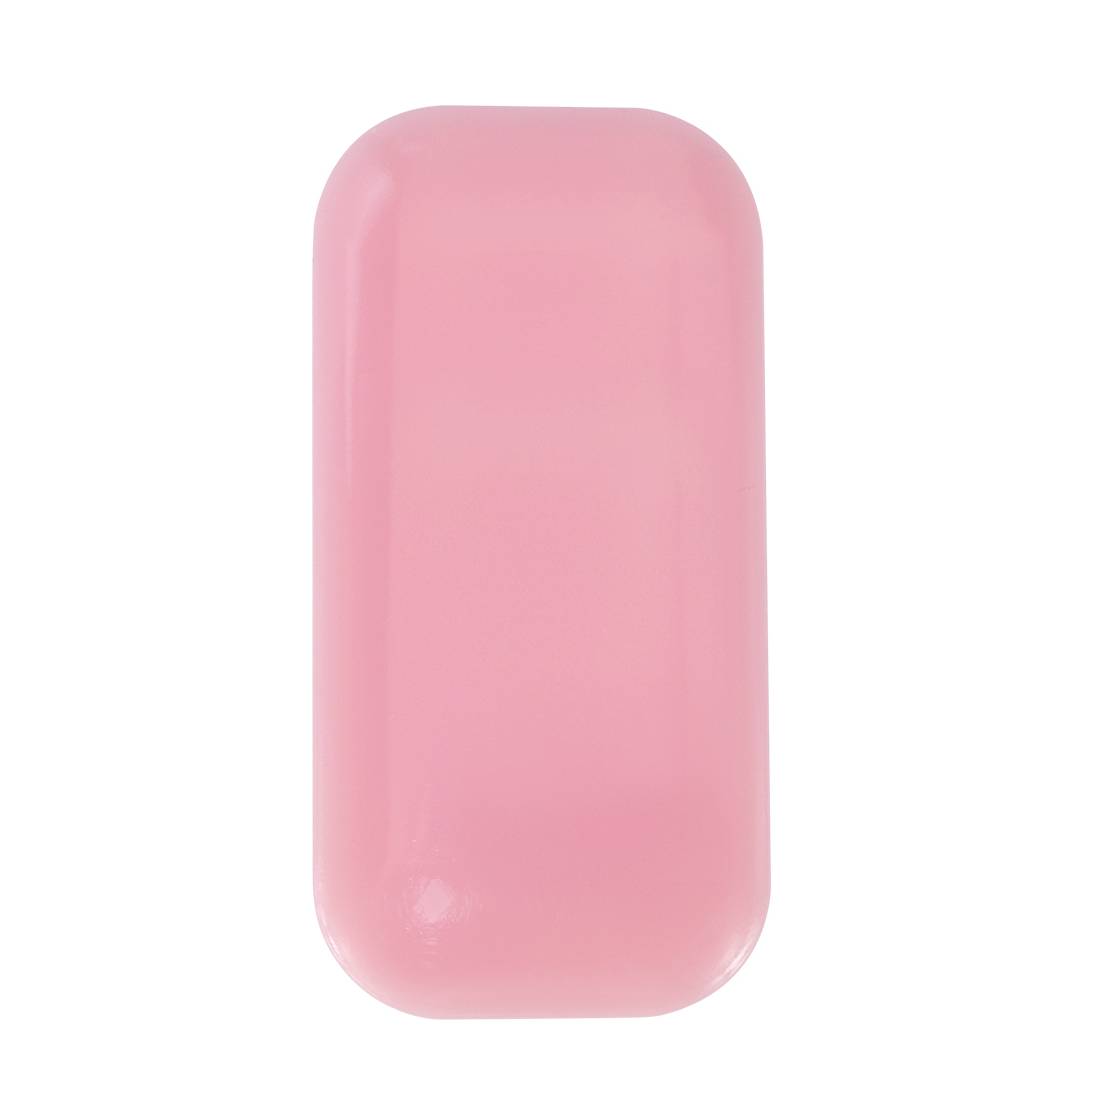 Glue Palette for False Eyelashes (Pink)